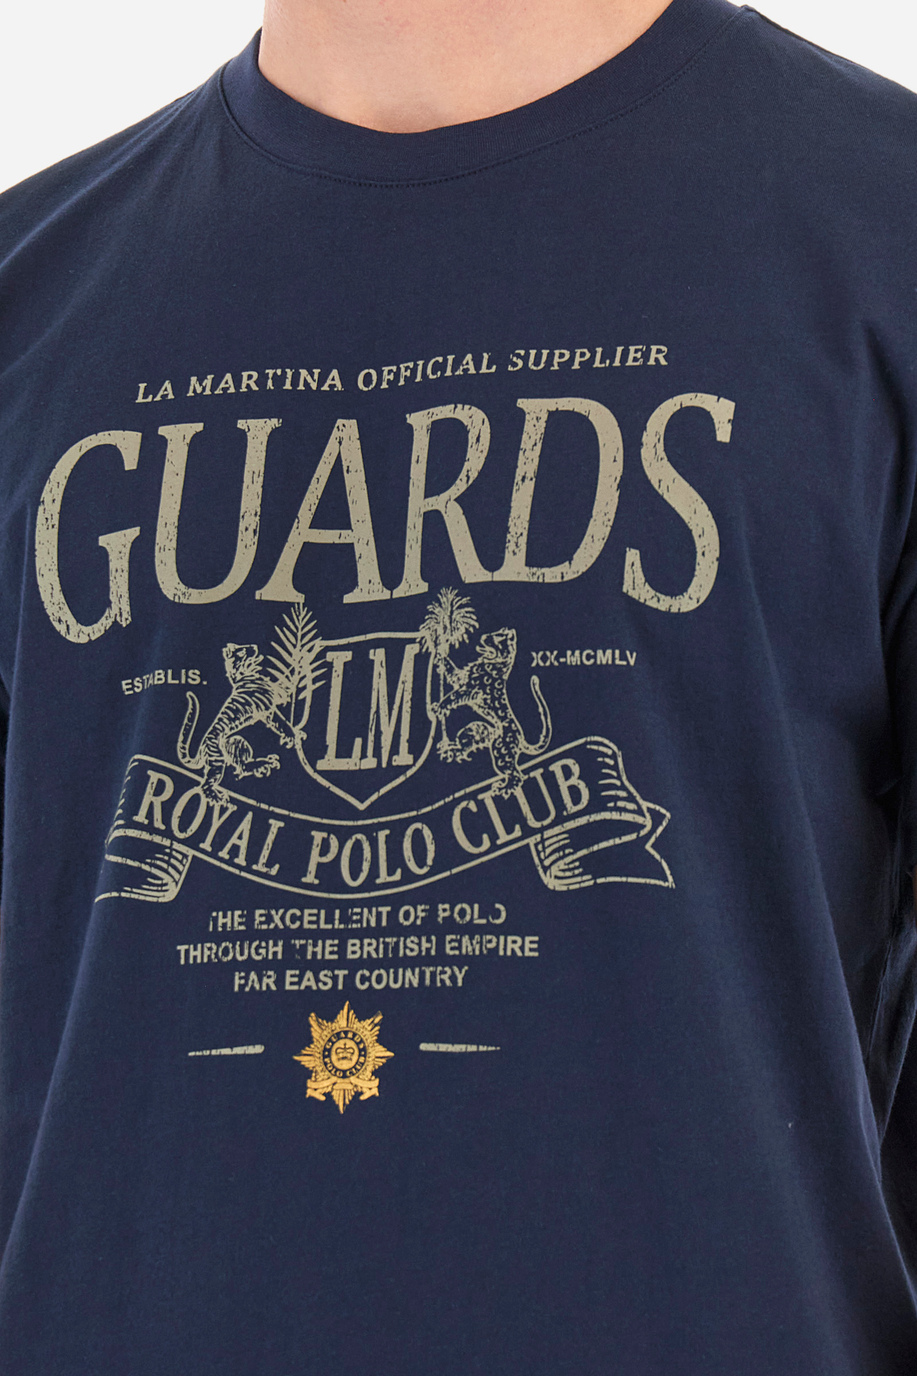 T-Shirt aus Baumwolle Regular Fit - Yu - Guards - England | La Martina - Official Online Shop